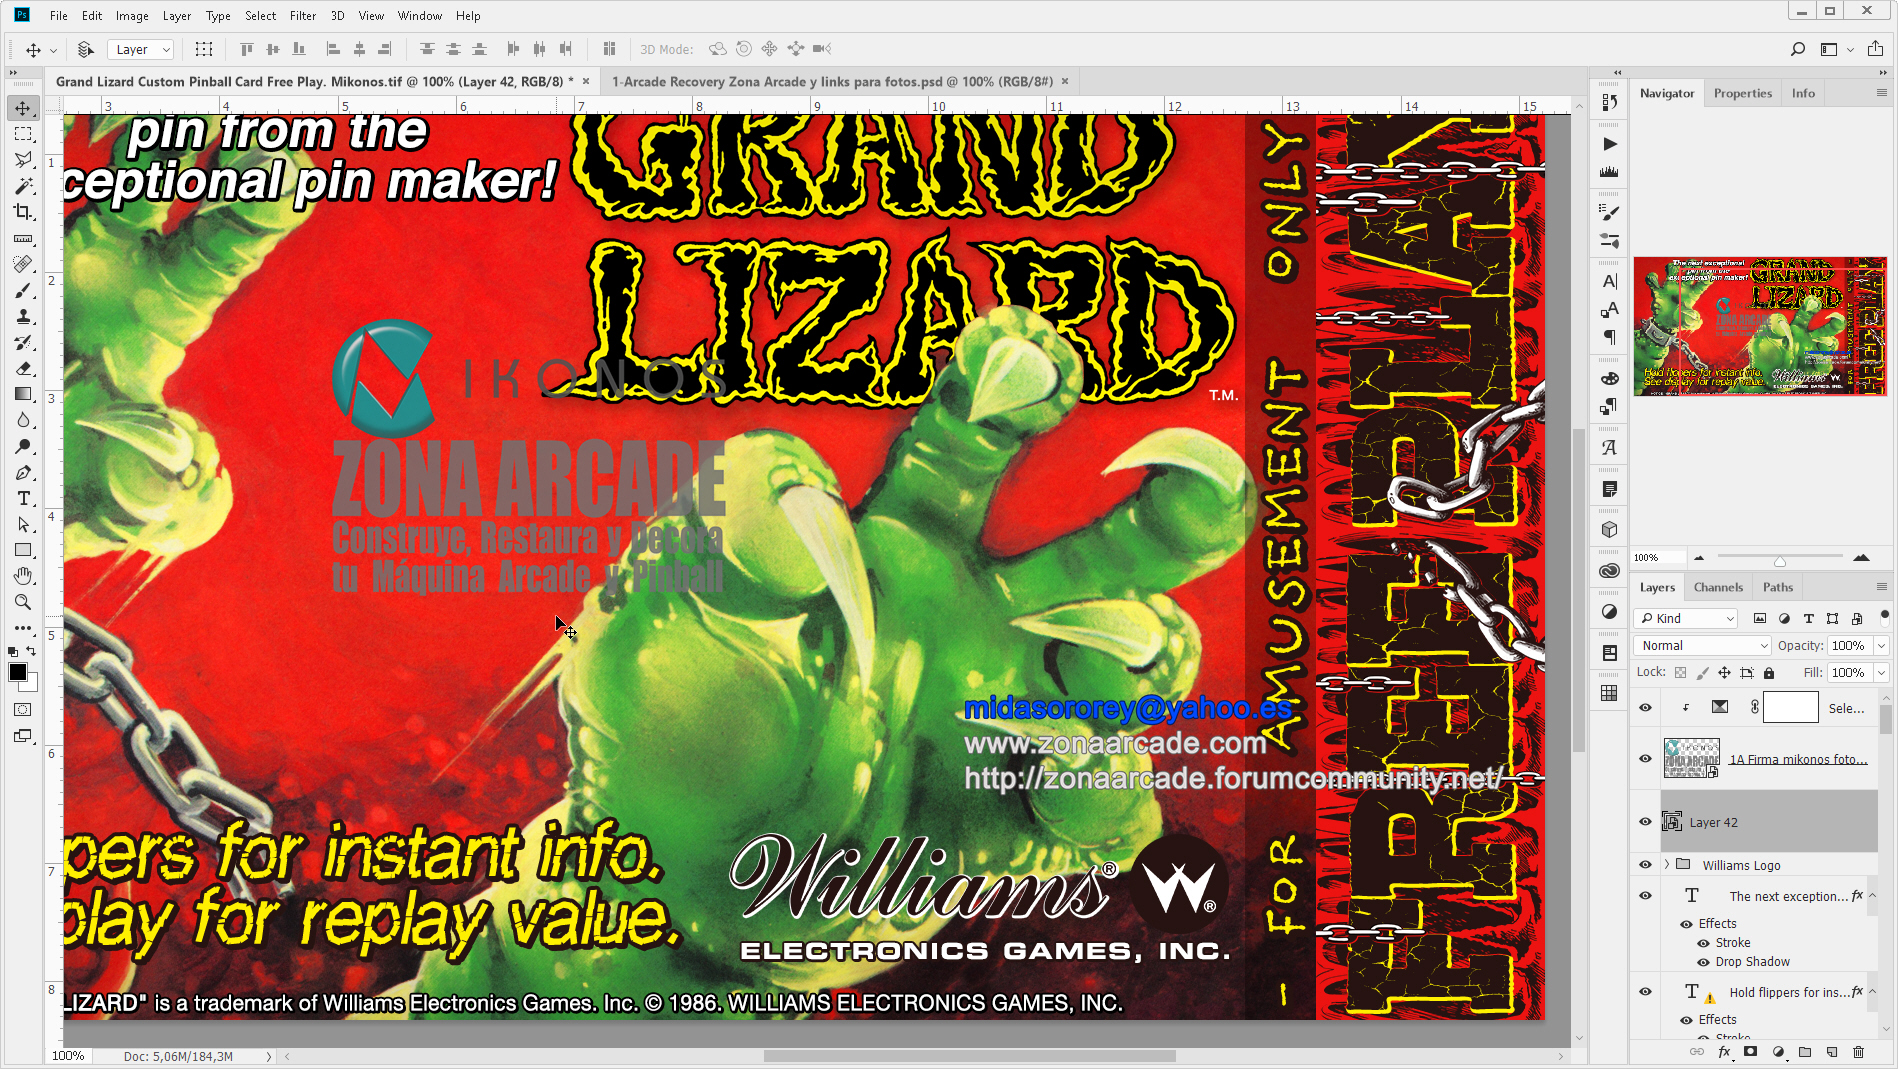 Grand-Lizard-Pinball-Custom-Card-Free-Play-Mikonos2